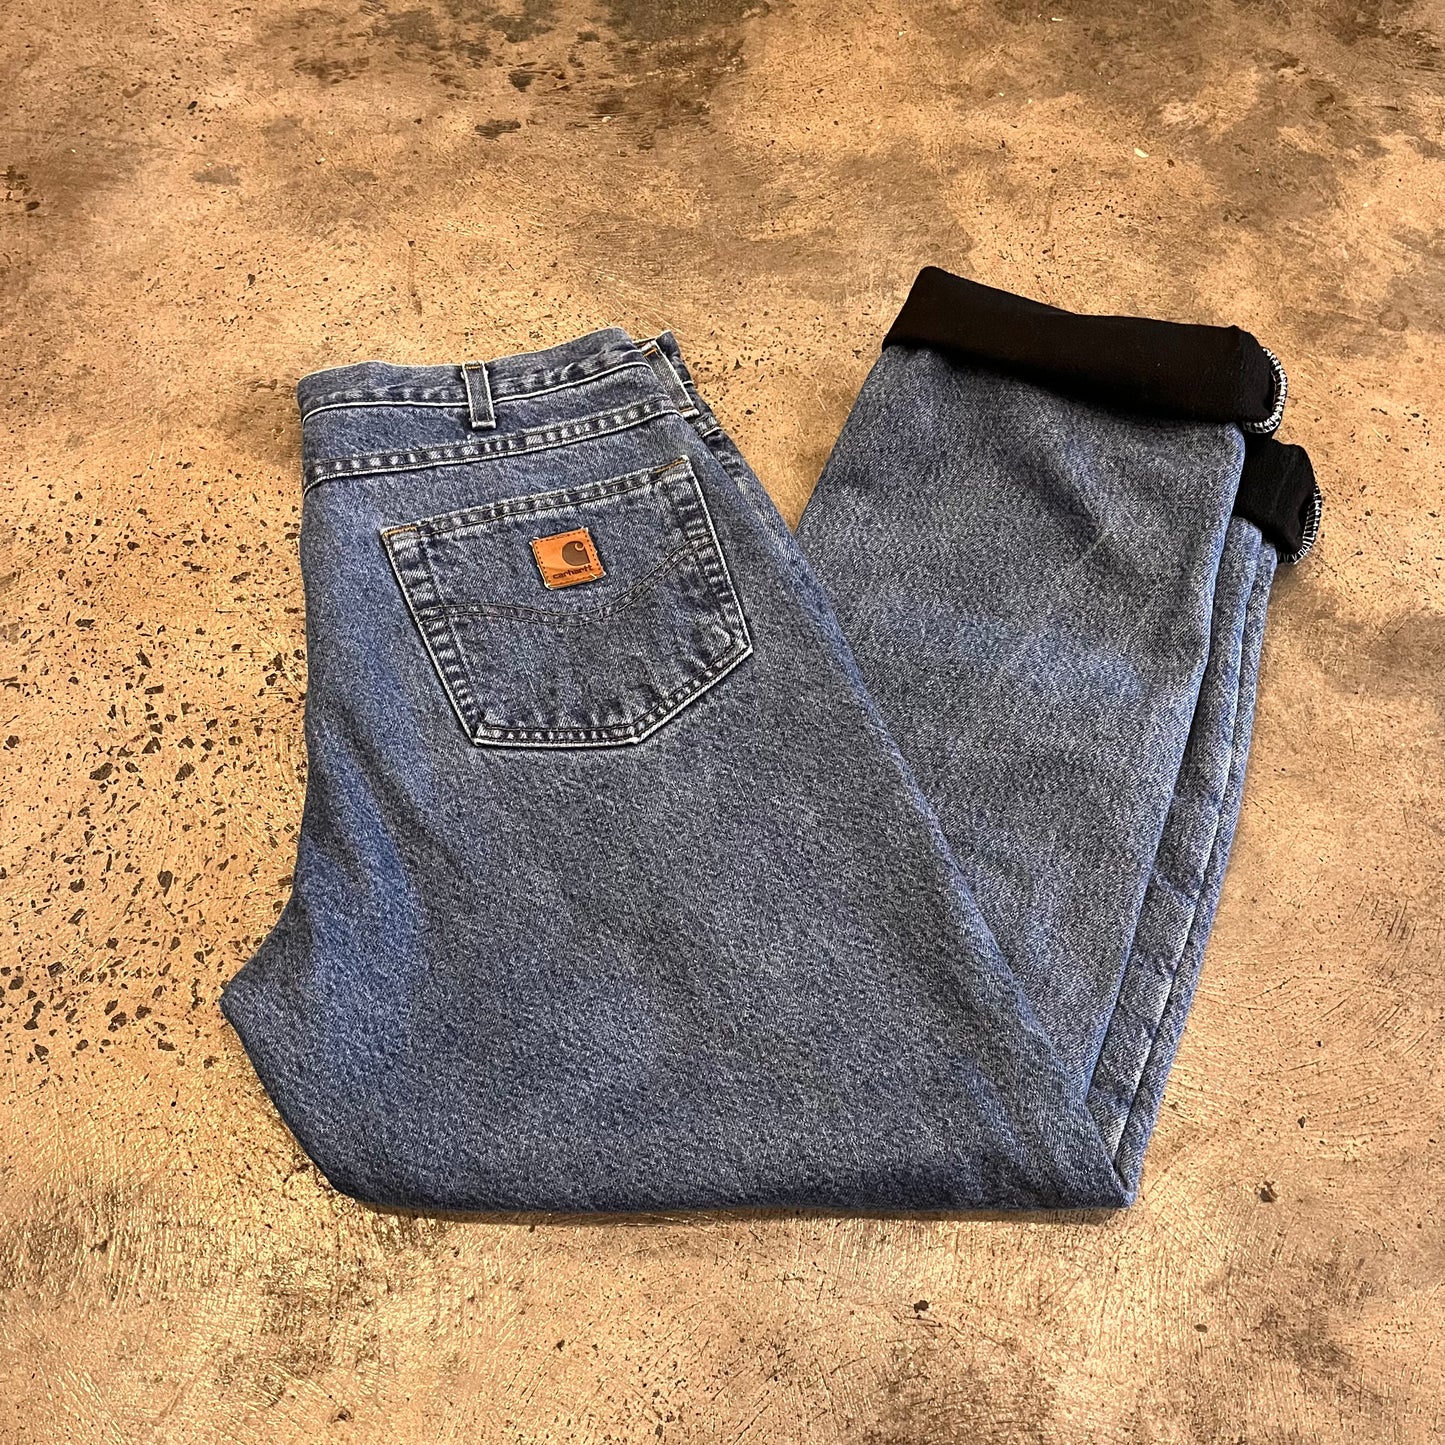 Carhartt Vintage Denim Jeans Thermal Lined Size 34